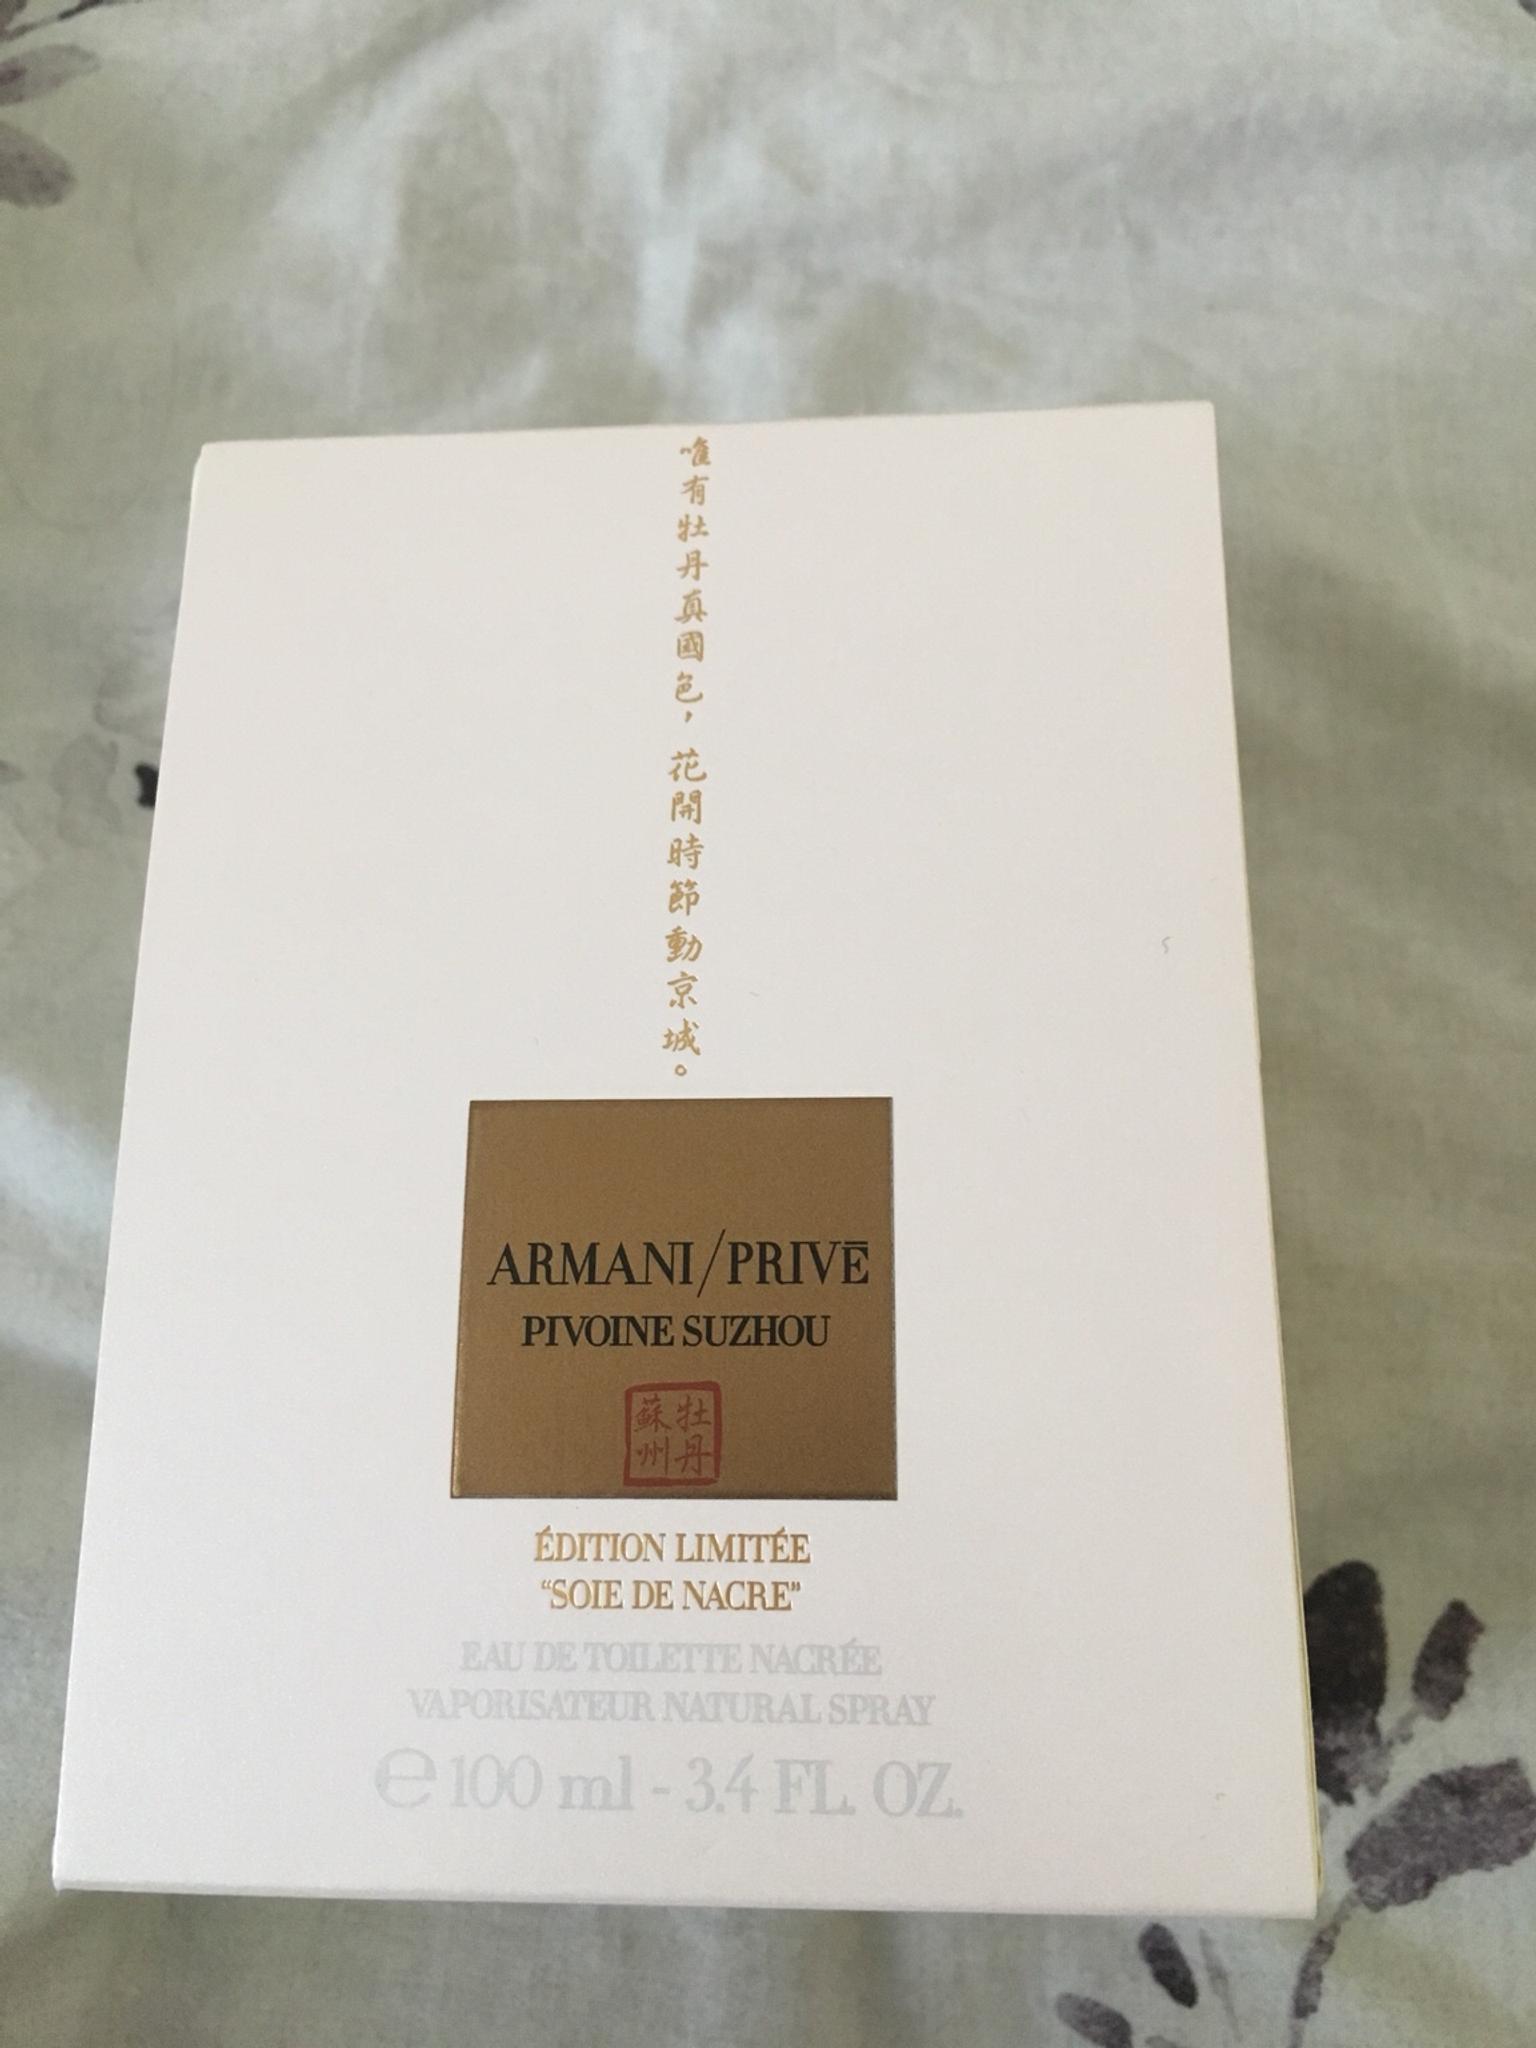 armani pivoine suzhou limited edition